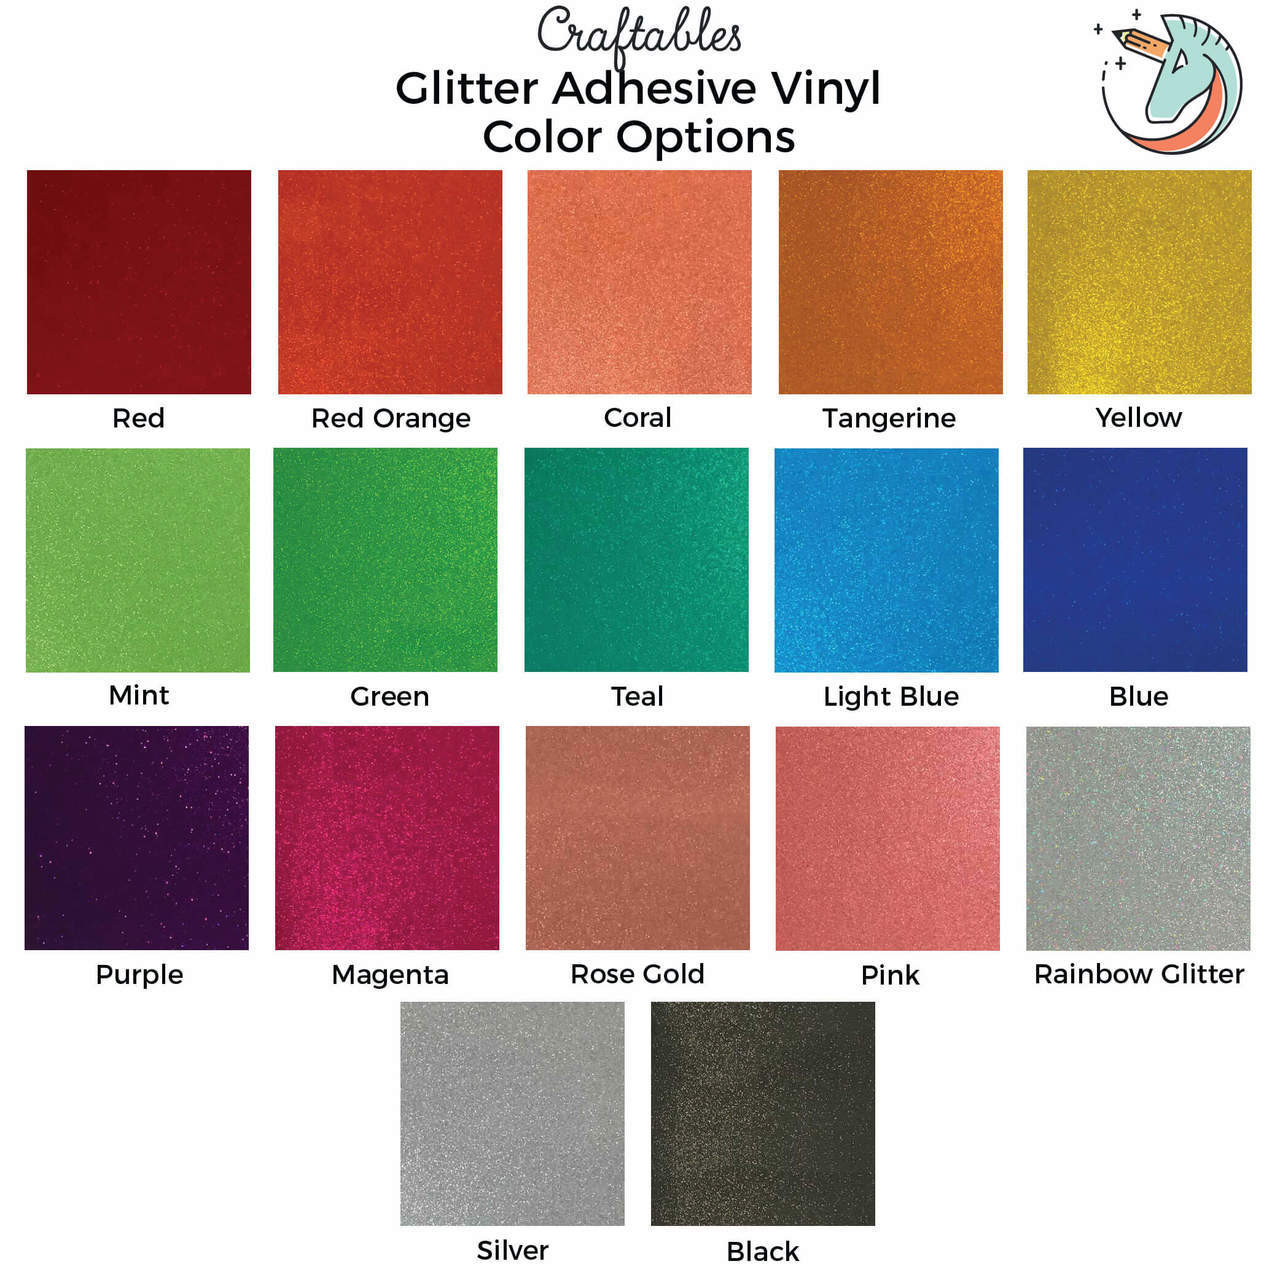 Black Glitter Adhesive Vinyl Rolls By Craftables